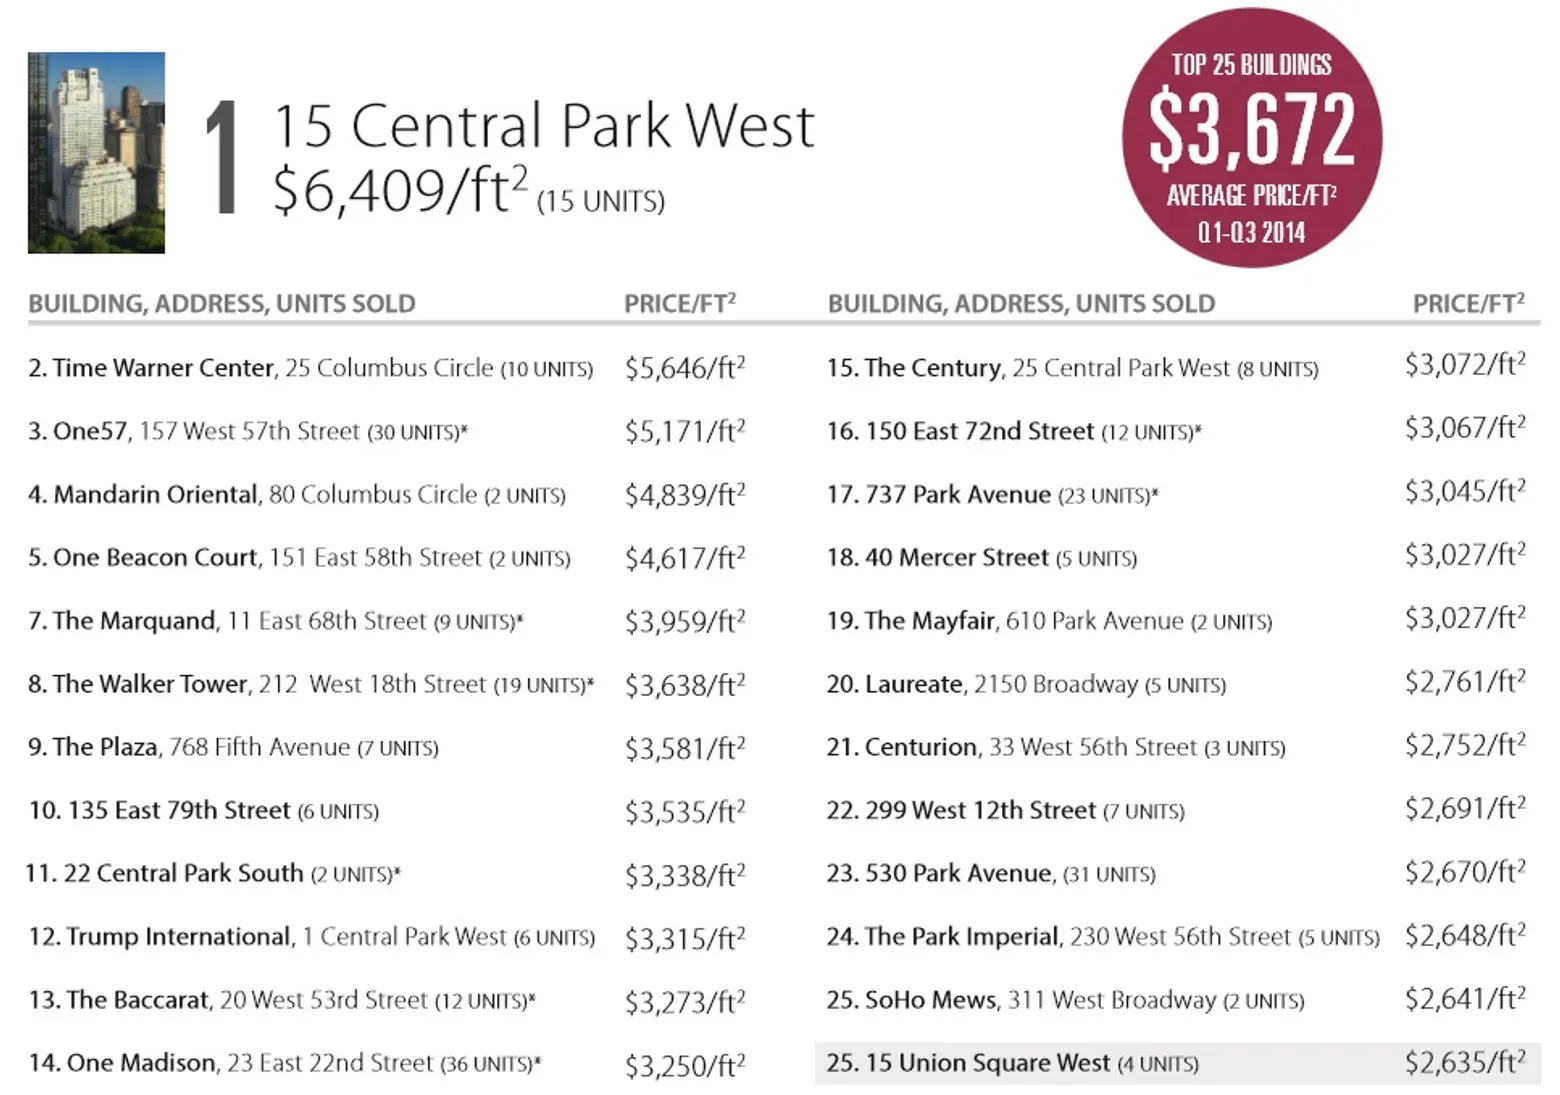 2014 top condo buildings by price per square foot